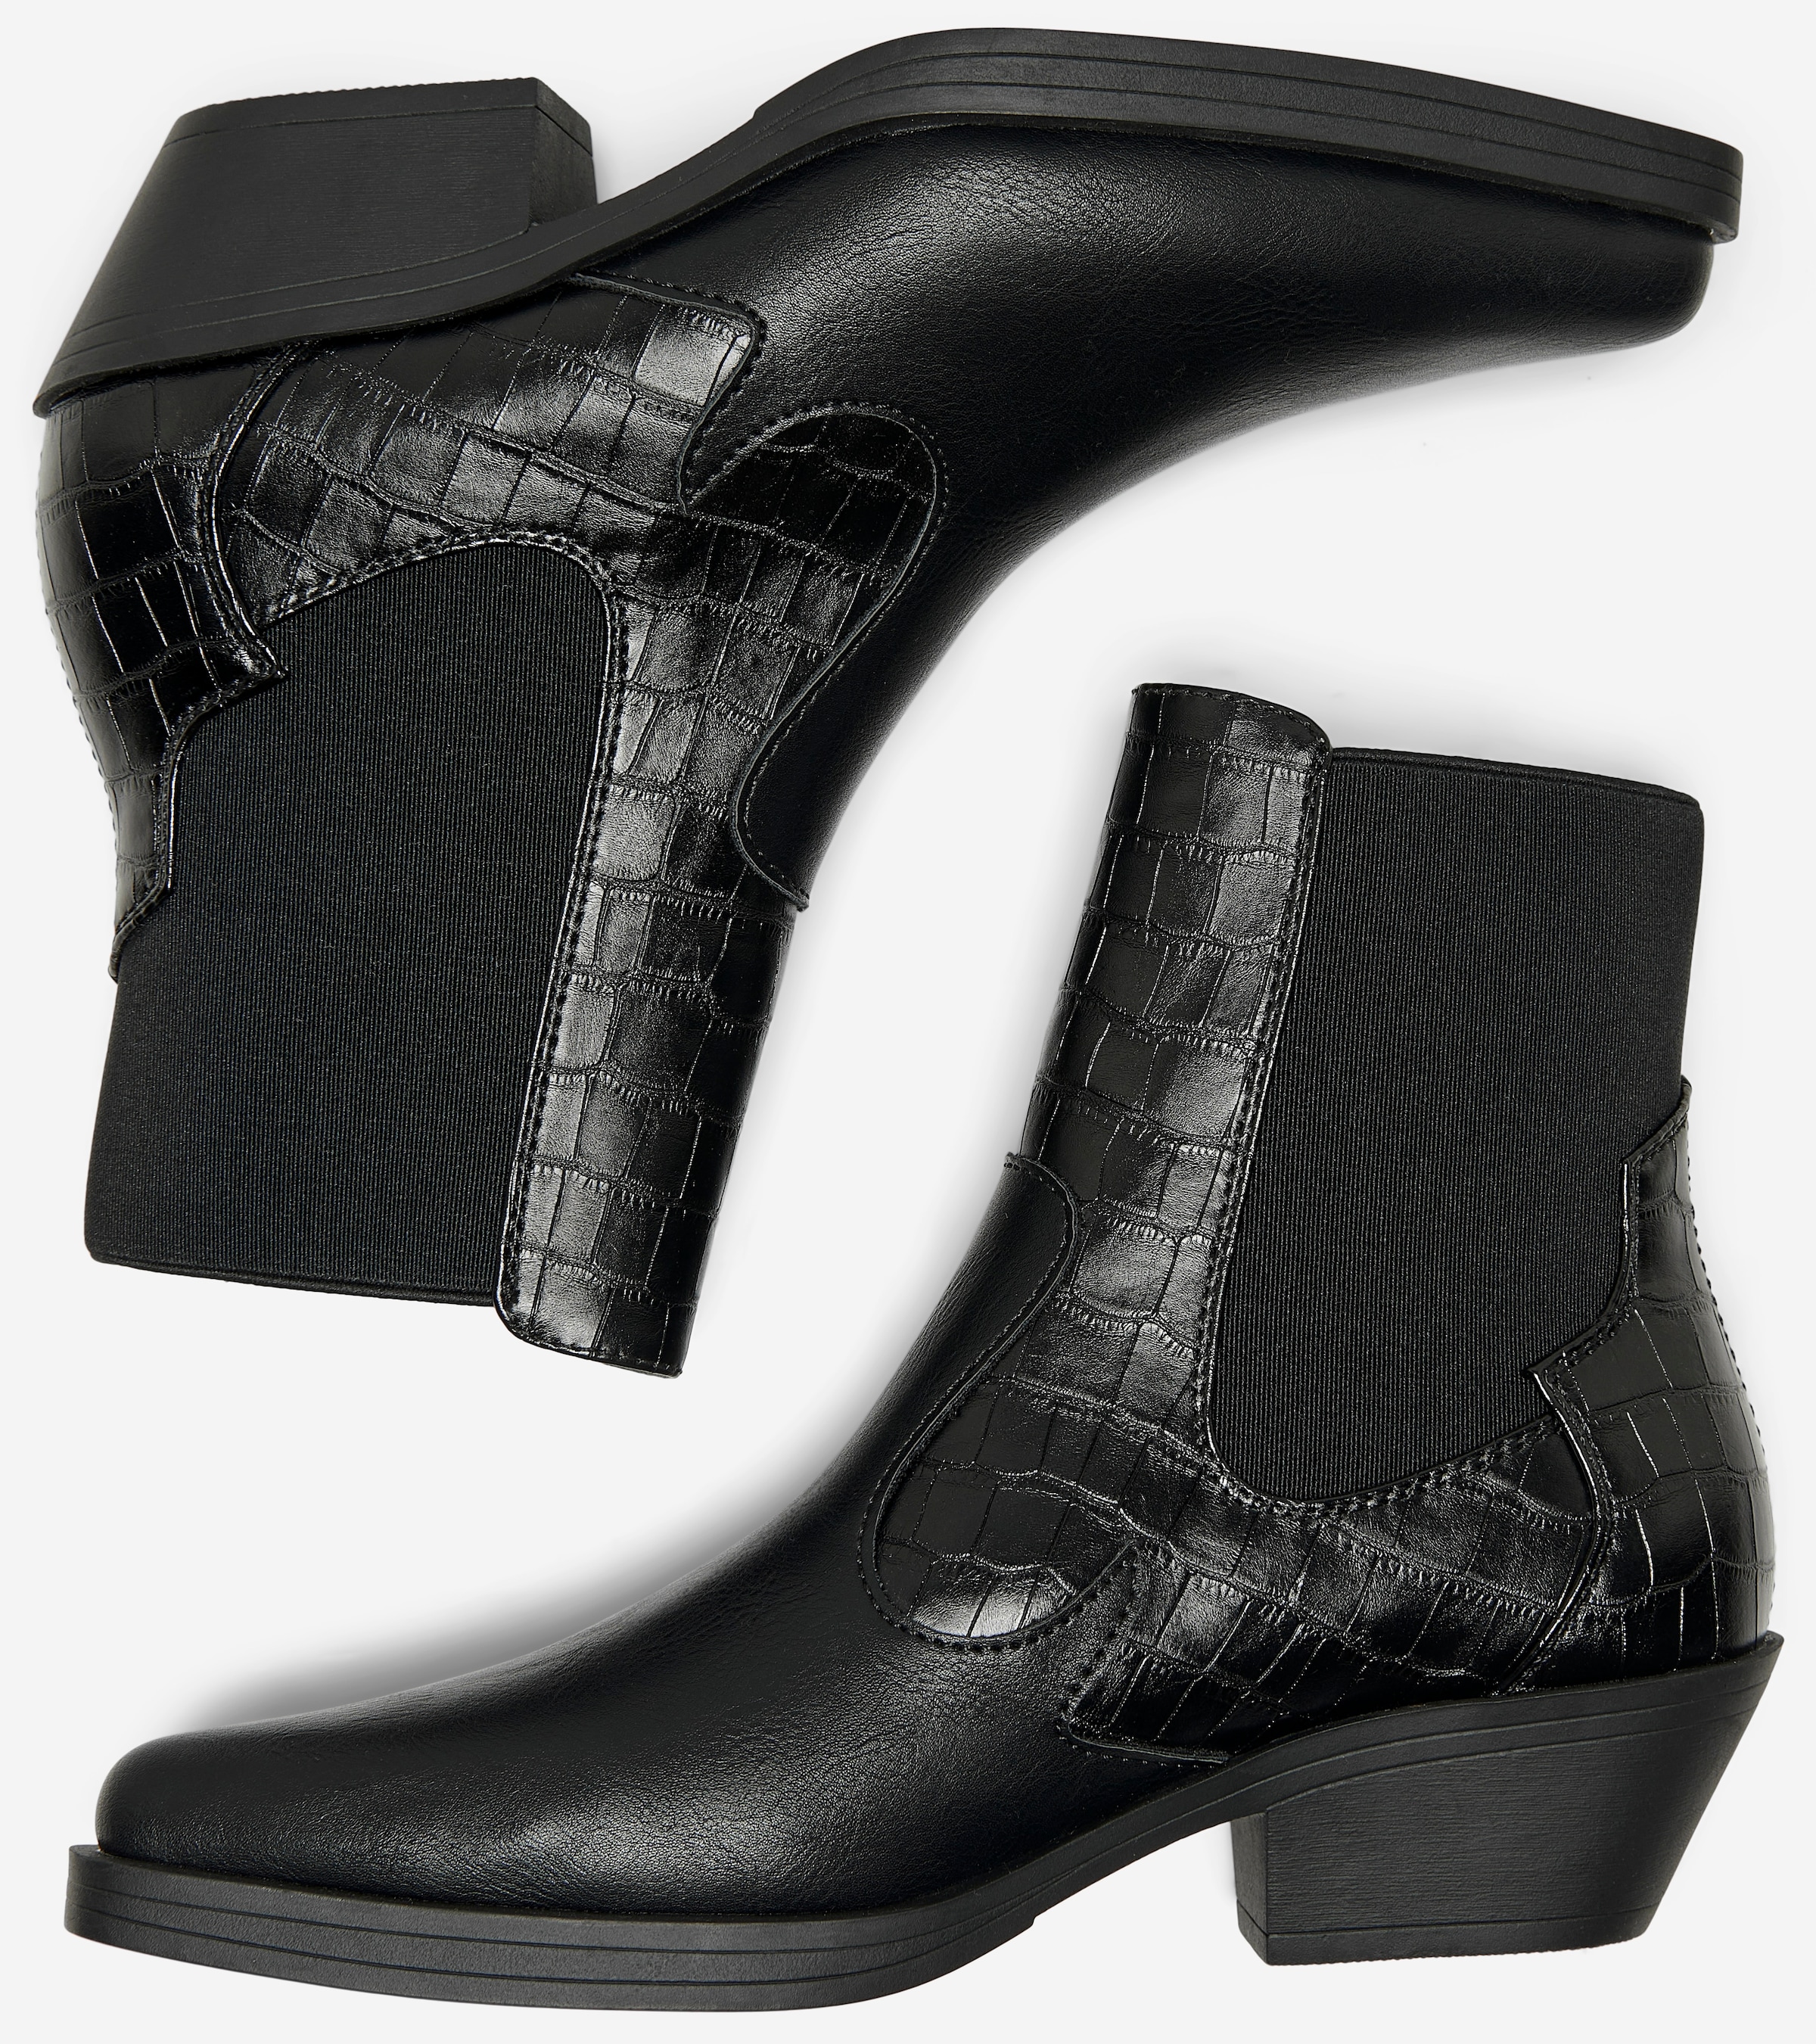 ONLY Shoes Westernstiefelette »ONLBRONCO-2«, Cowboy Stiefelette, Boots in spitz zulaufender Form